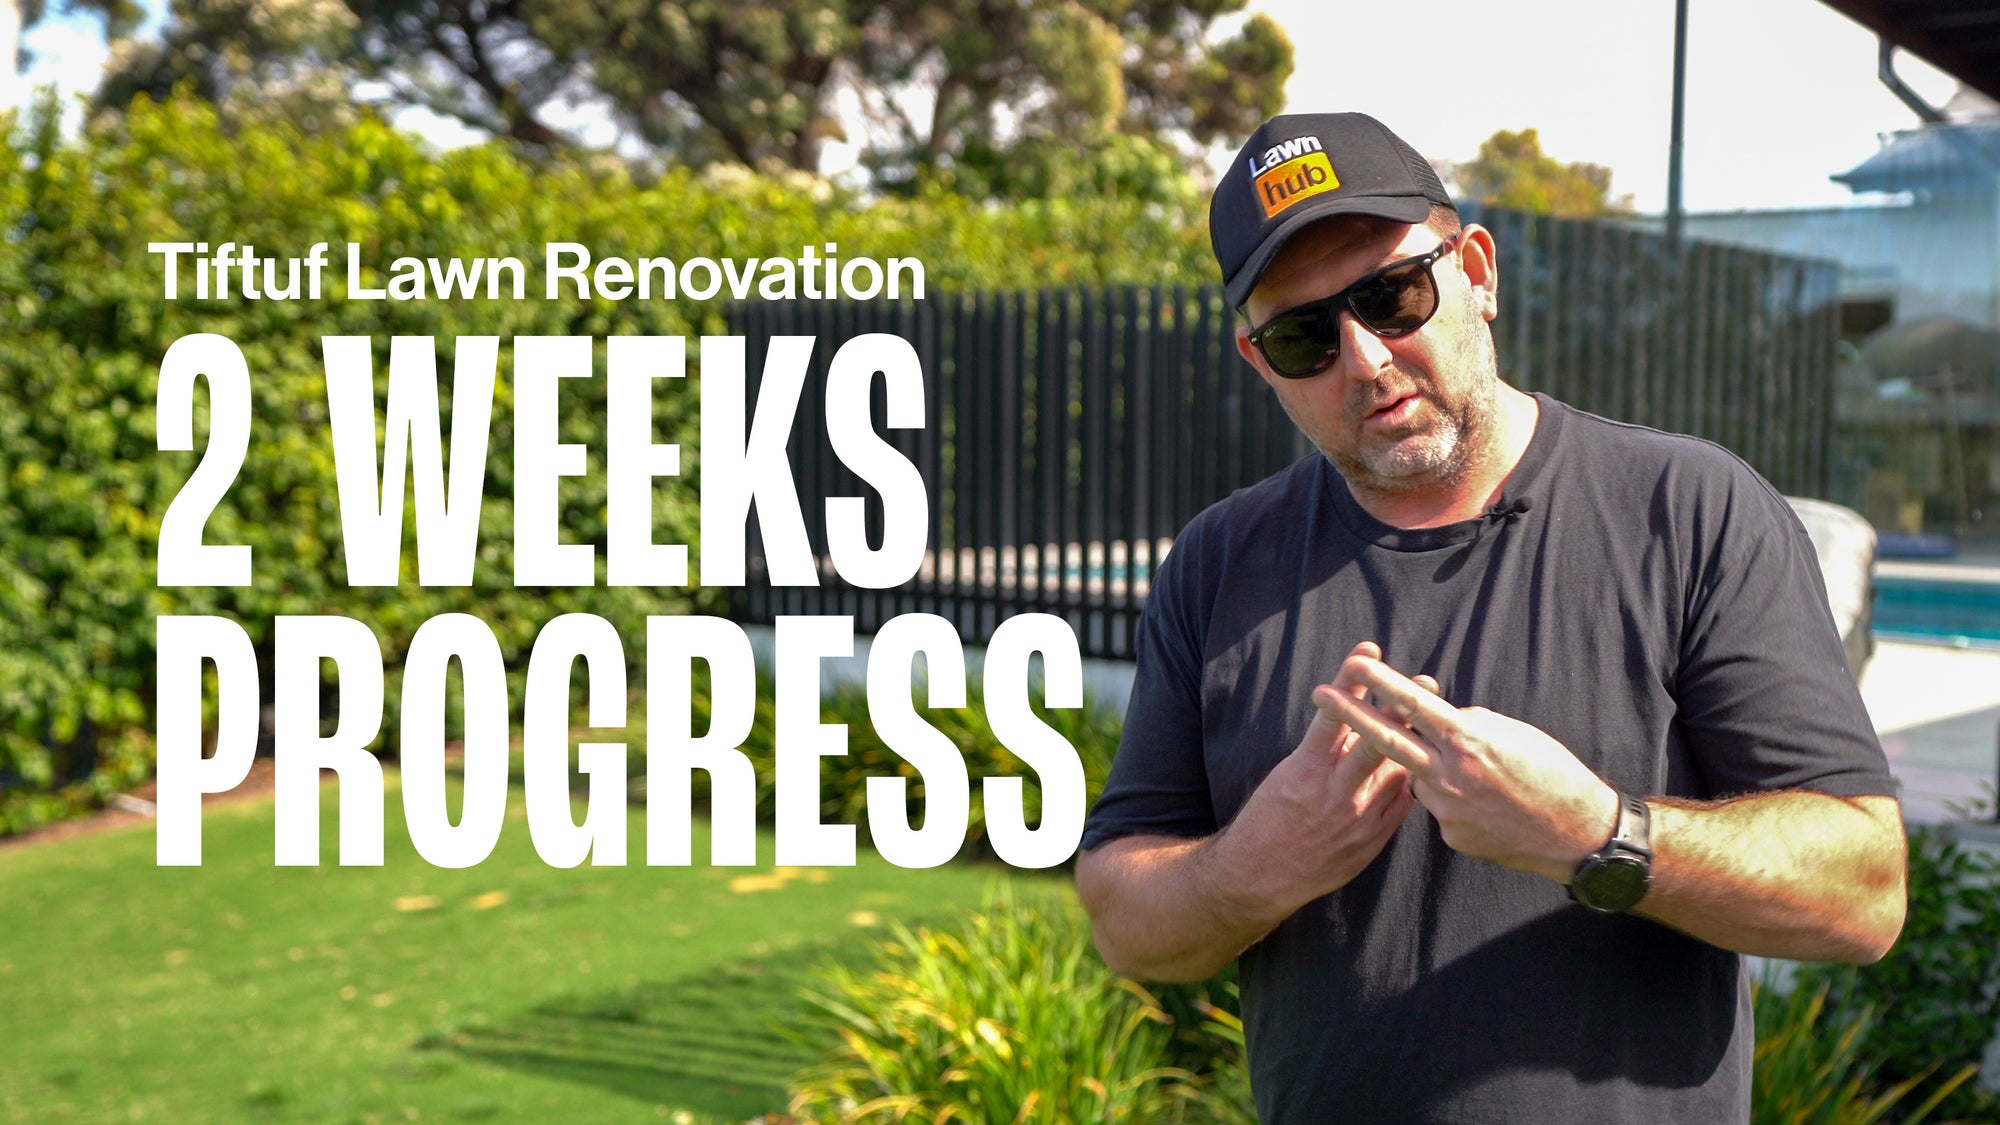 Tiftuf Lawn Renovation - 2 Week Progress